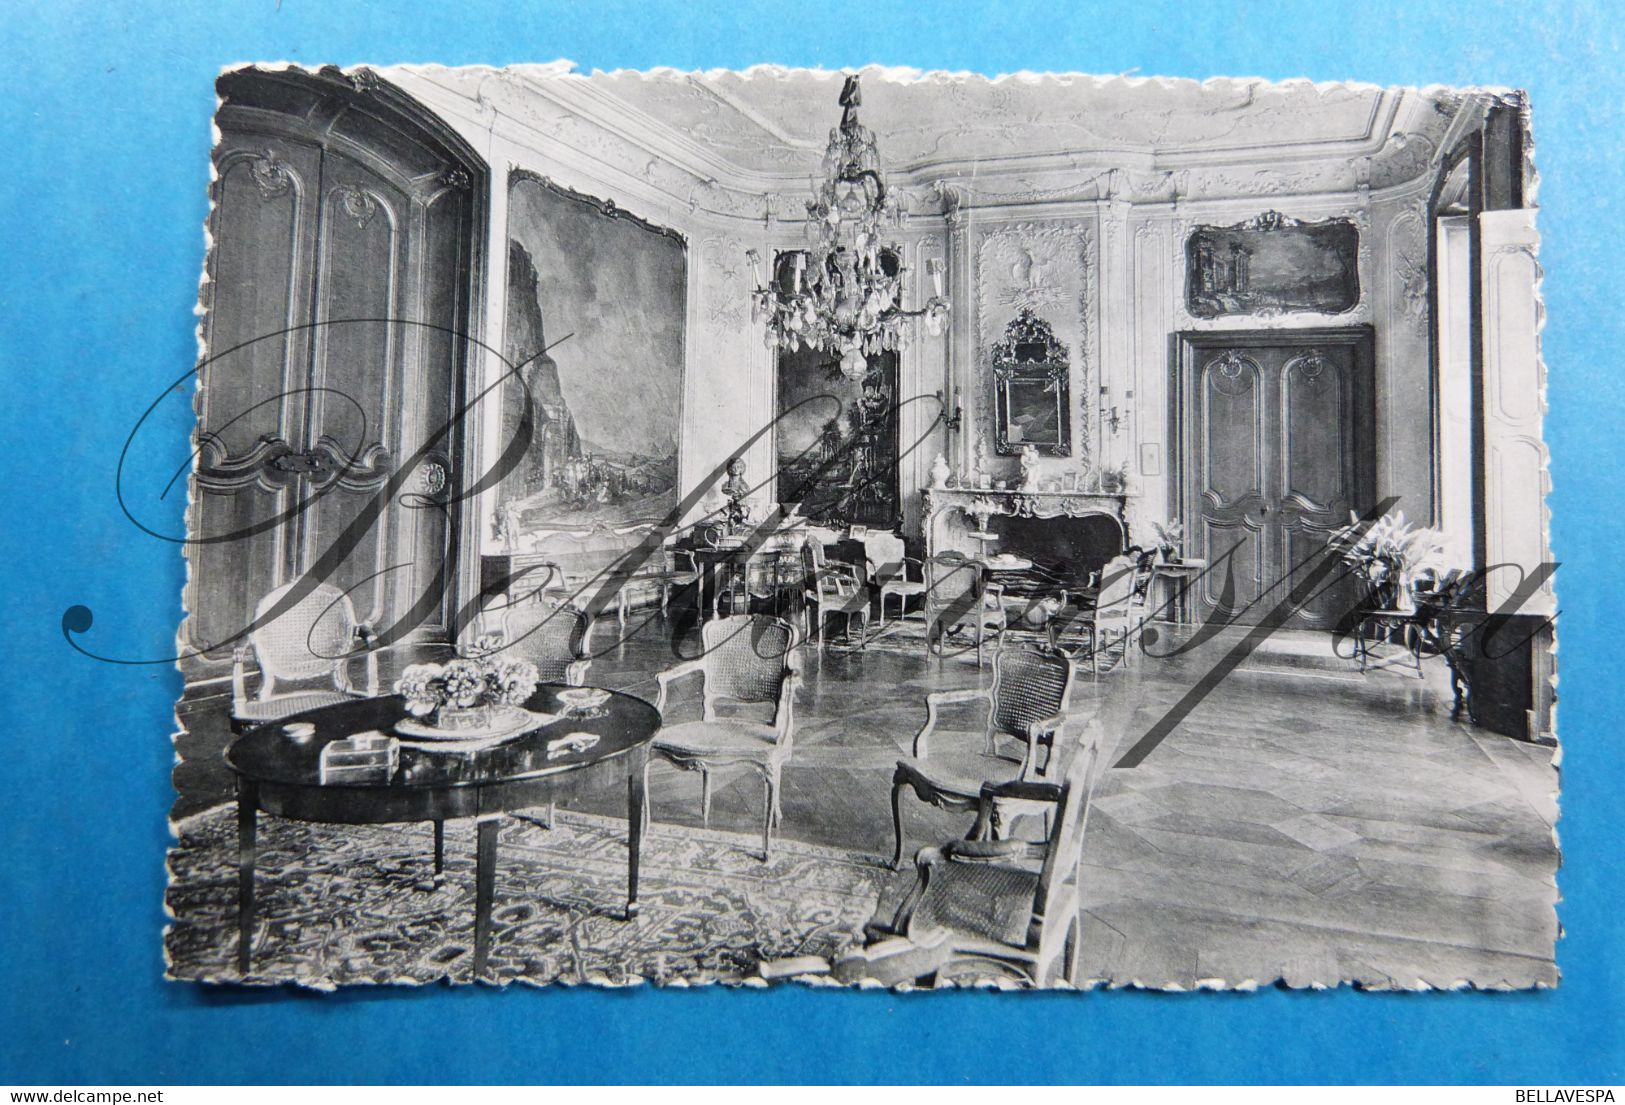 Bruggelette Chateau d'Attre . Kasteel van Attre lot  x 15 postcards- cartes postales- Mint